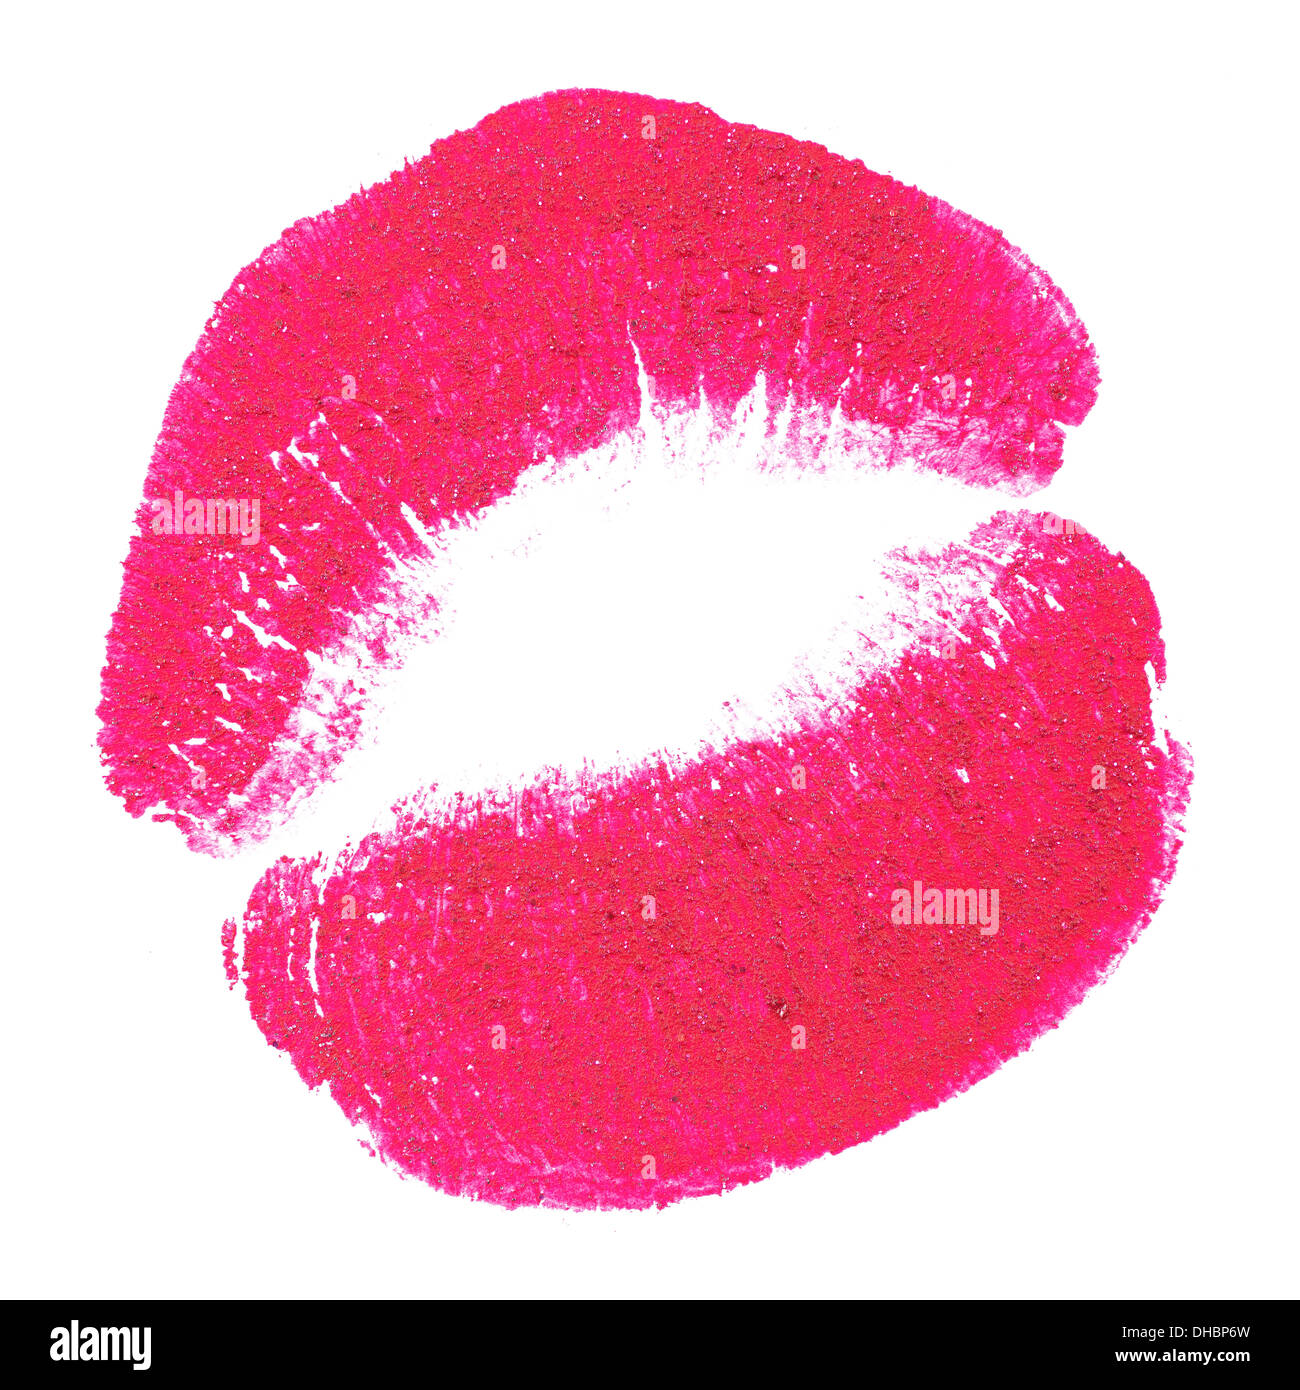 Lipstick kiss. Square composition. Stock Photo